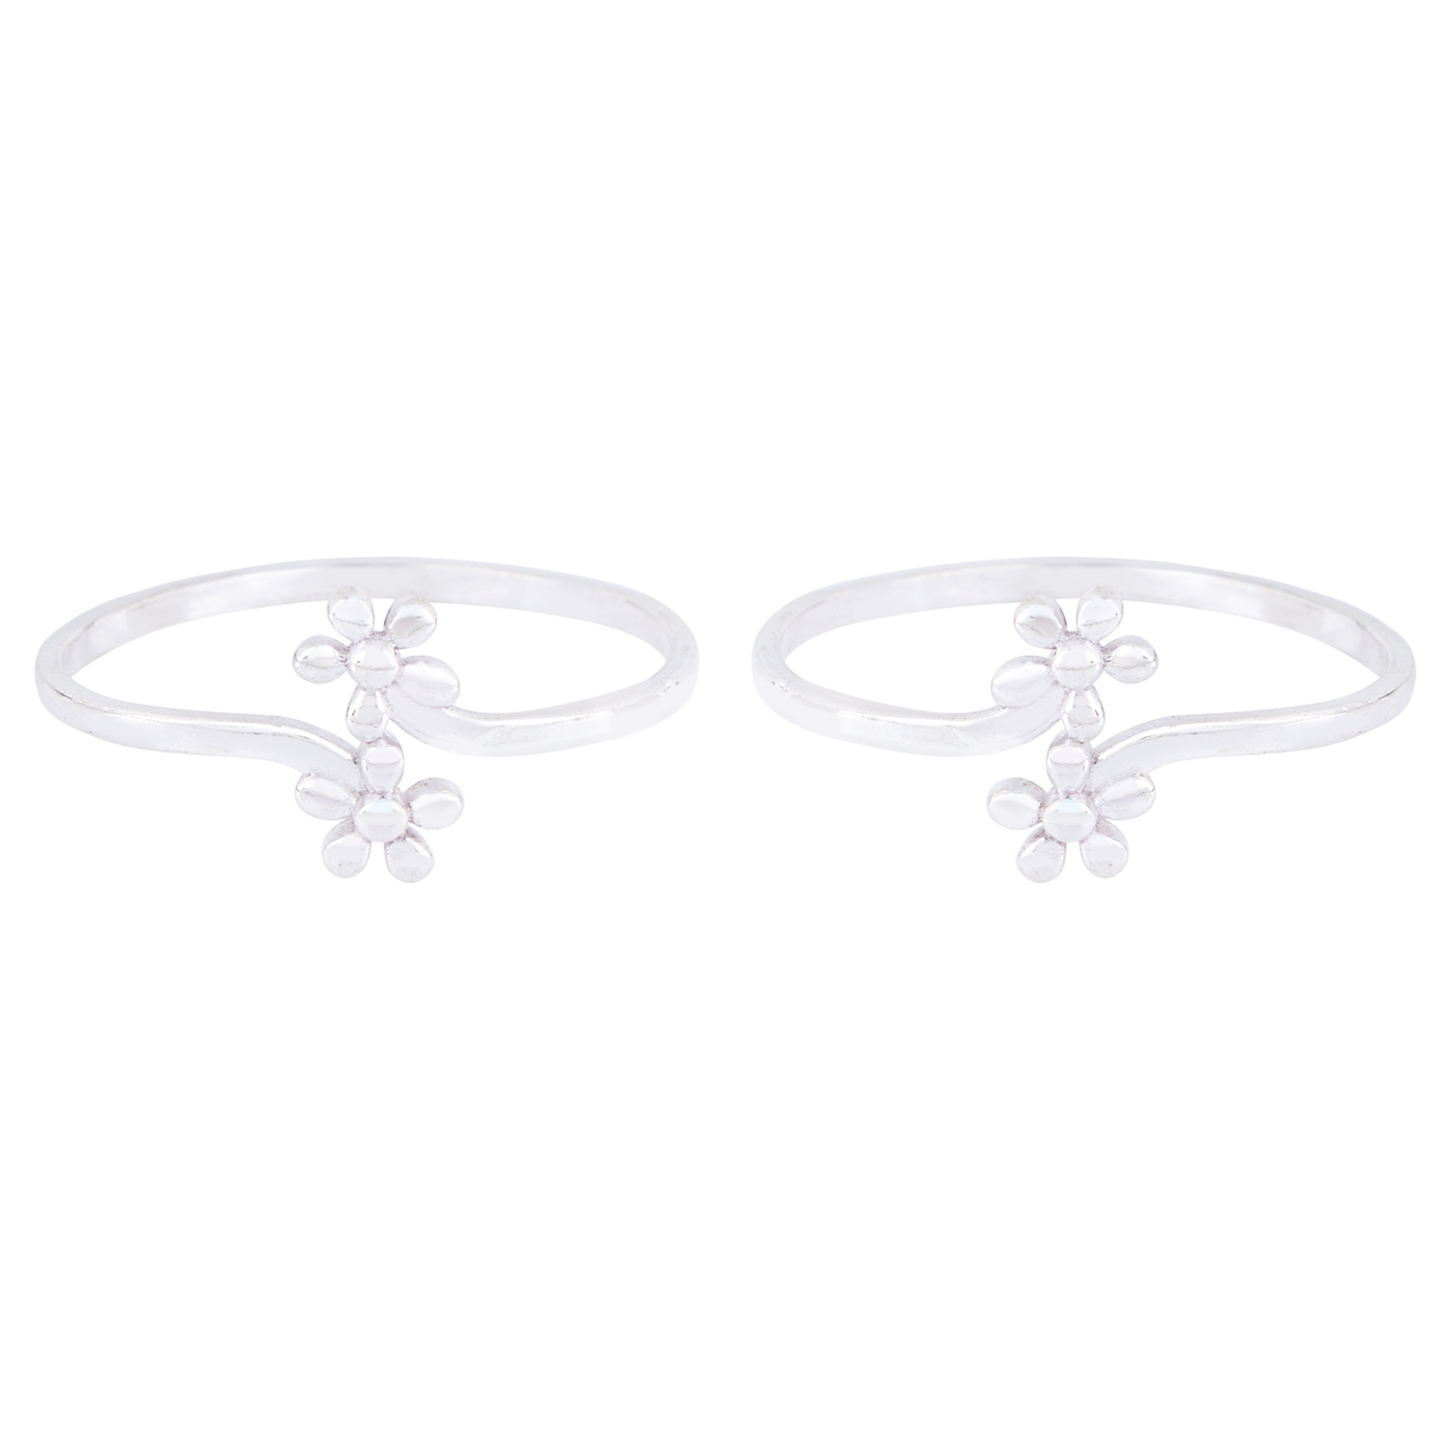 Nemichand Jewels 925 Sterling Silver Flower Toe Rings For Women (Free Size)